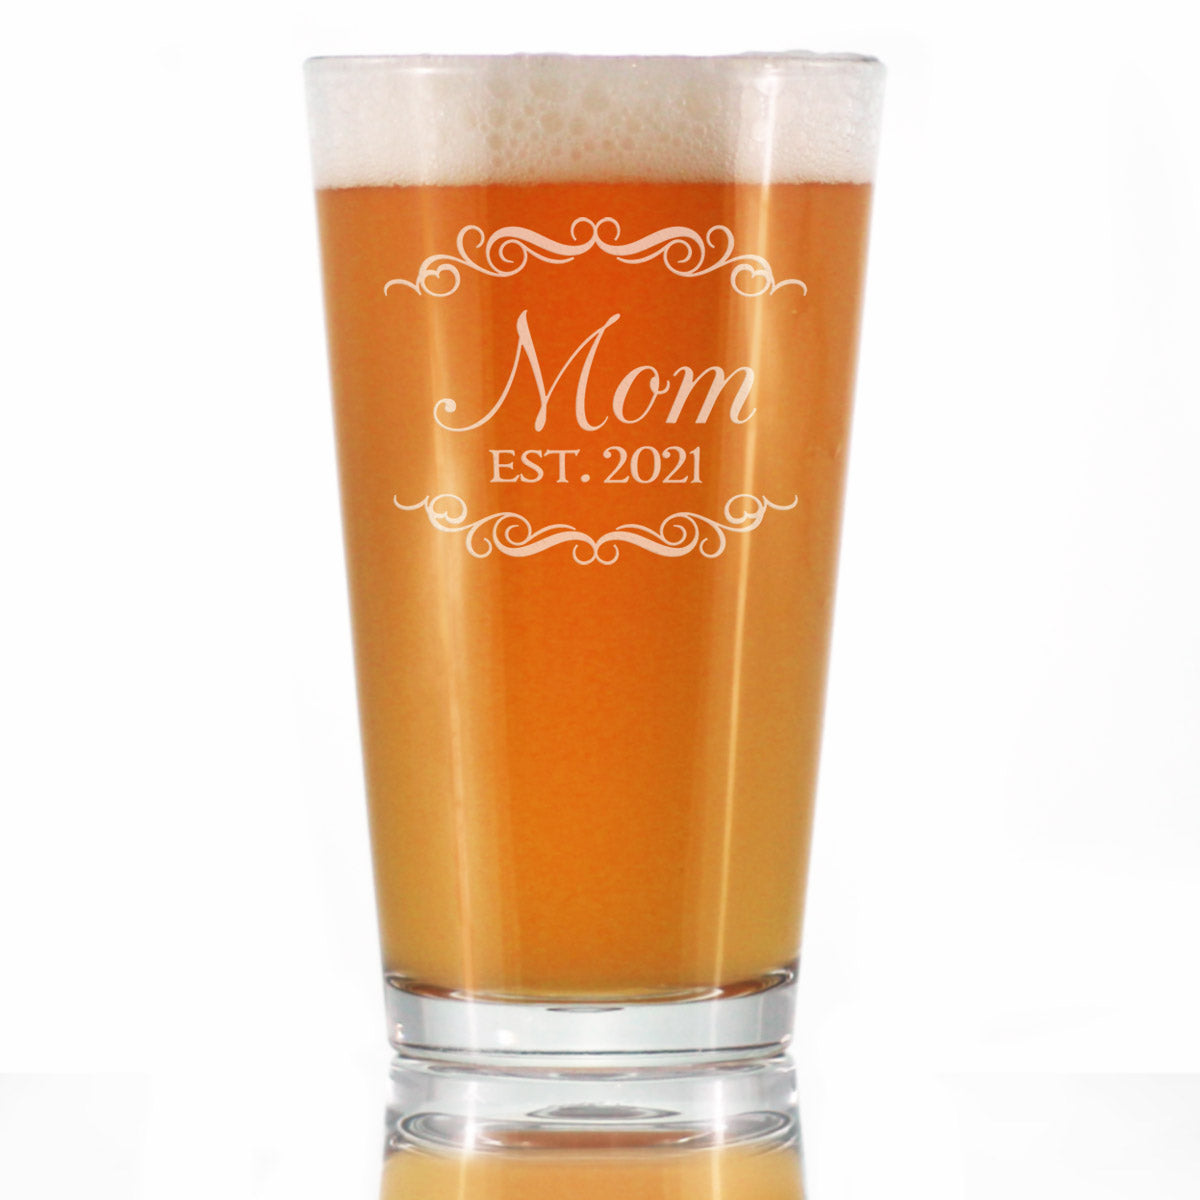 Mom Est. 2021 - Decorative - 16 Ounce Pint Glass